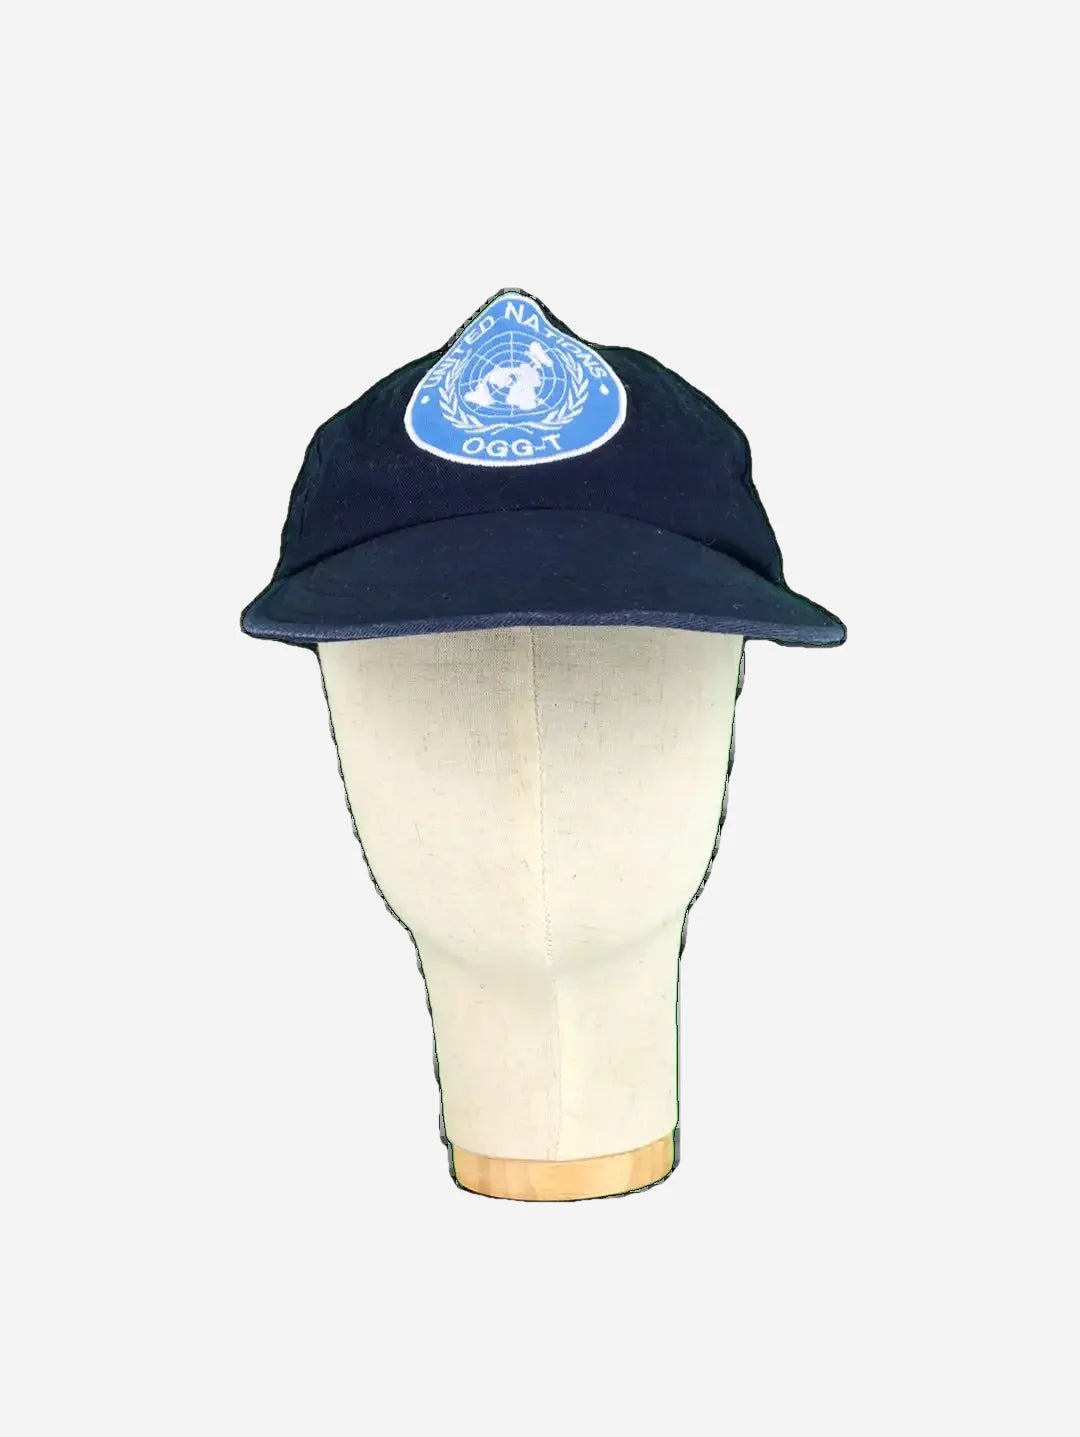 United Nations Cap